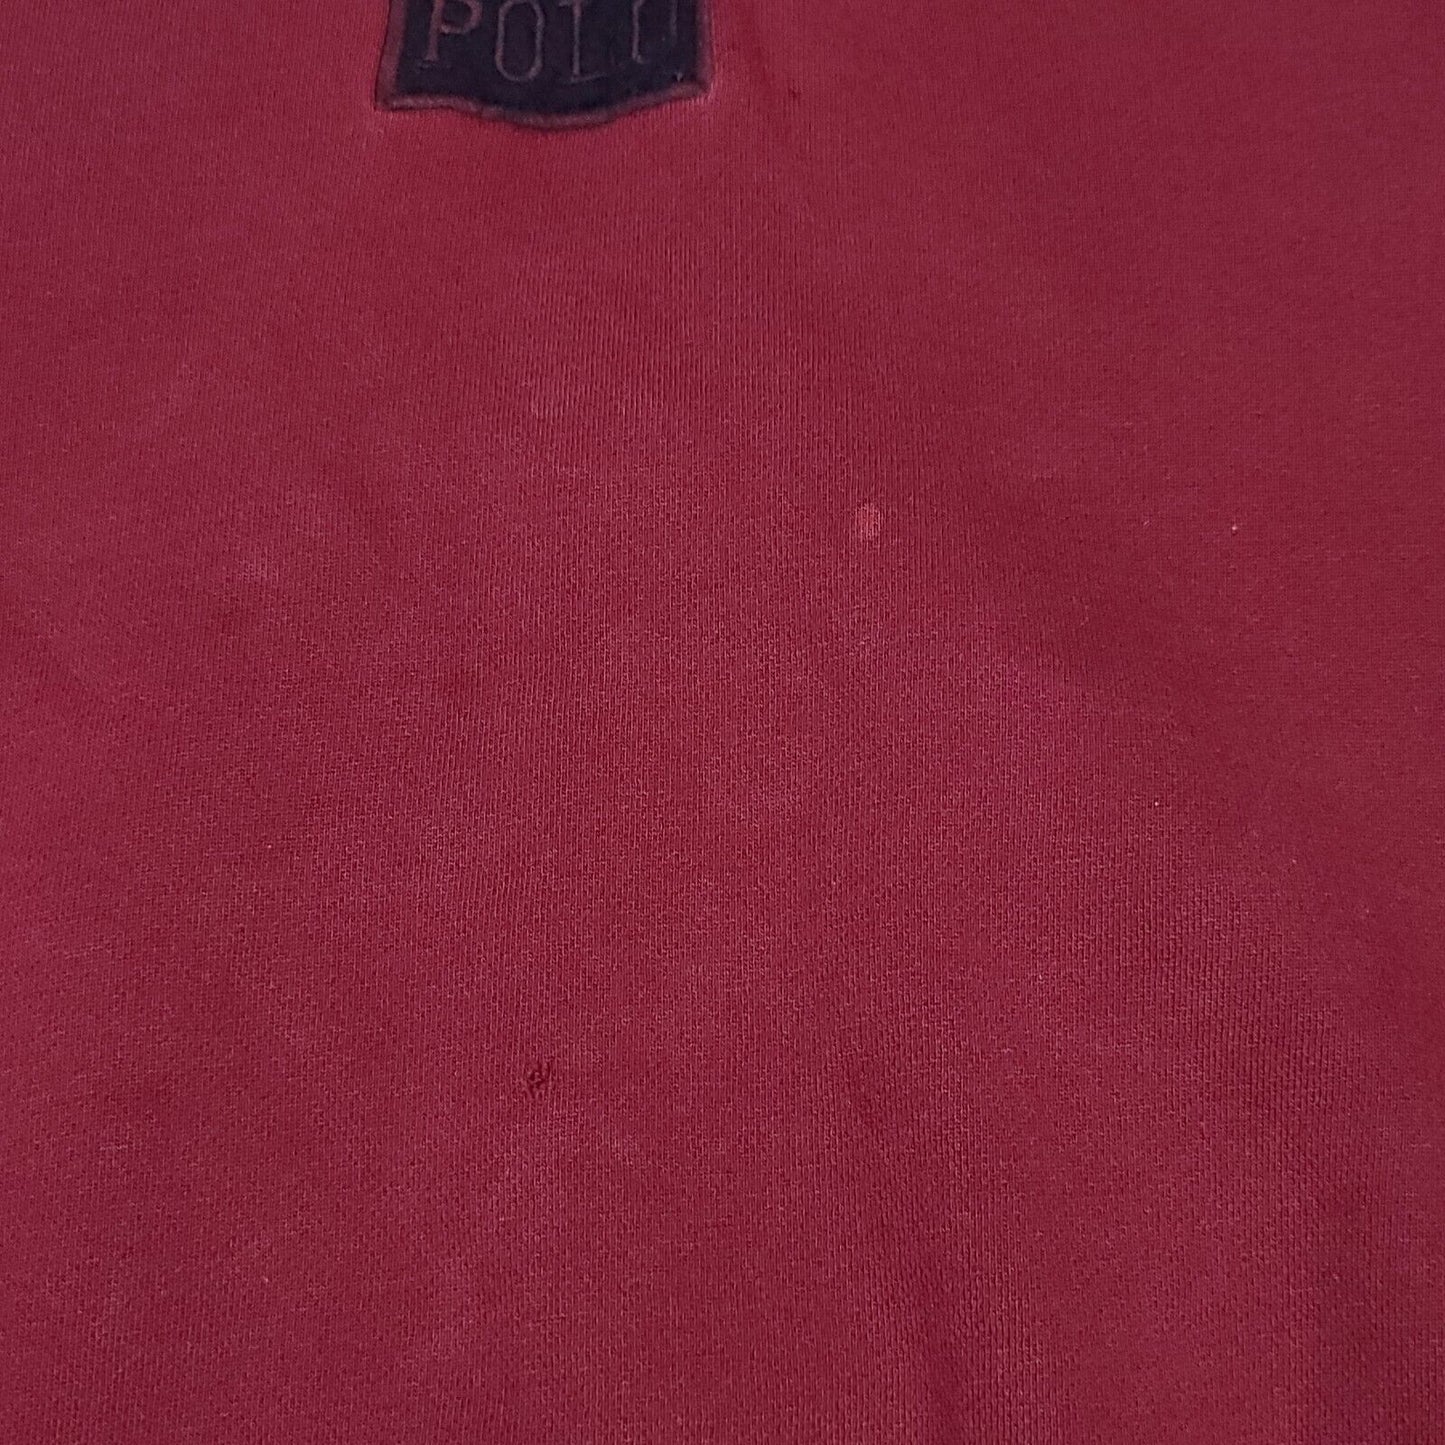 Polo Ralph Lauren Center P Logo Maroon Sweatshirt